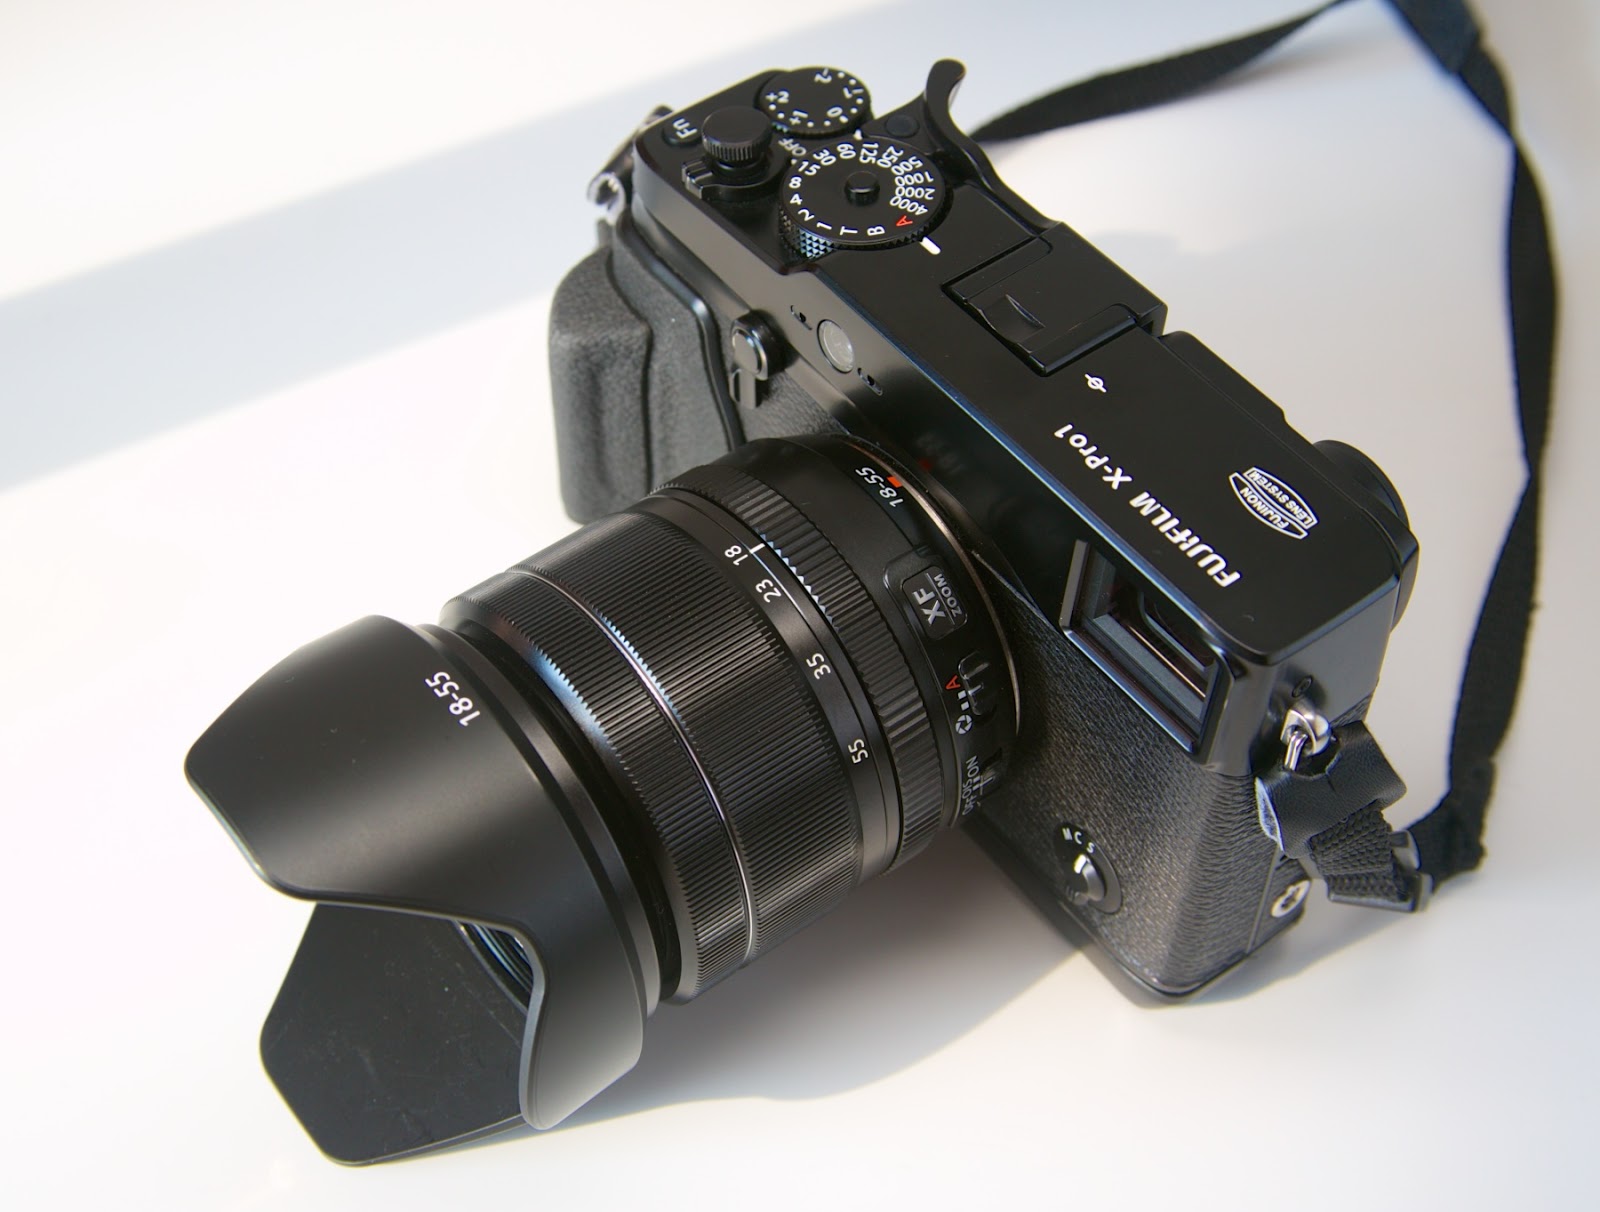 Fujinon Lens Xf18 55mmf2.8 4 R Lm Ois